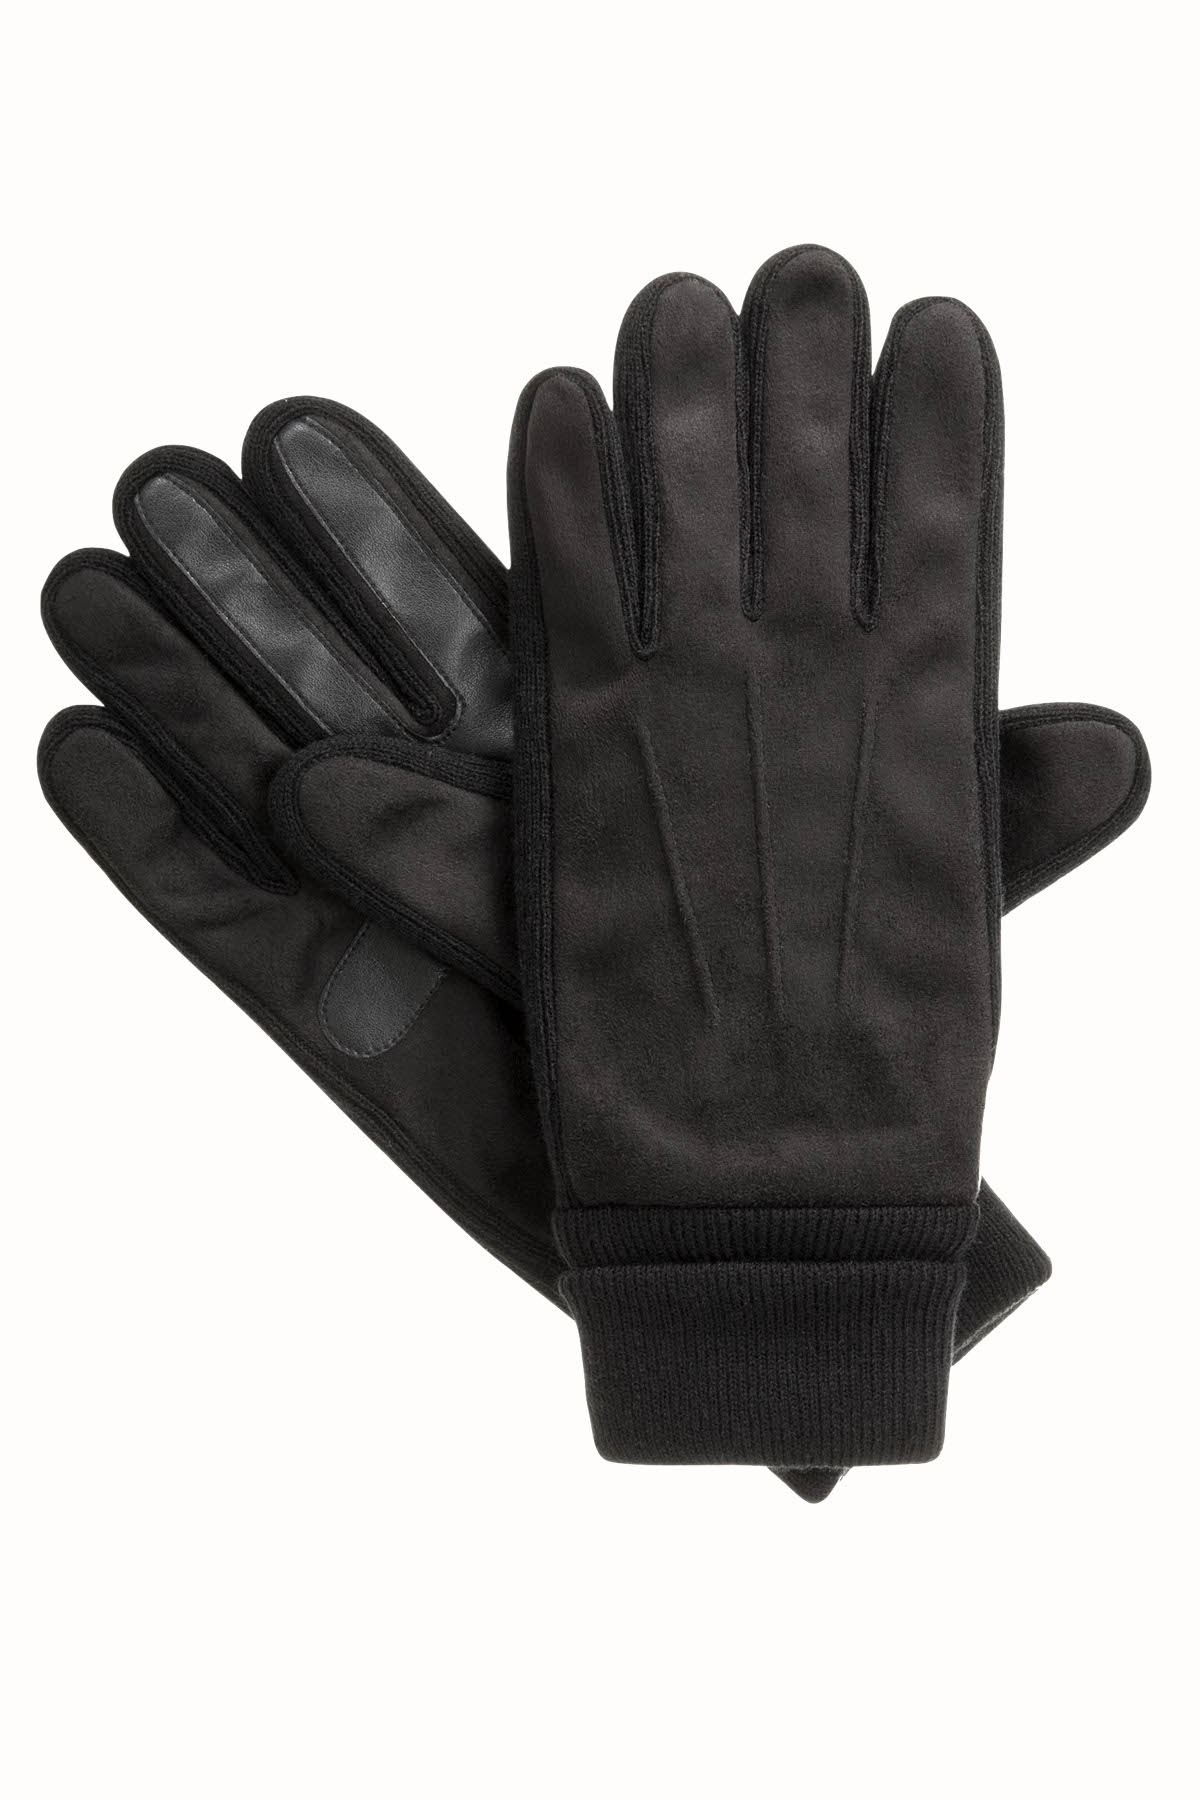 Isotoner Signature Black Fleece SmarTouch Brushed Microfiber Gloves